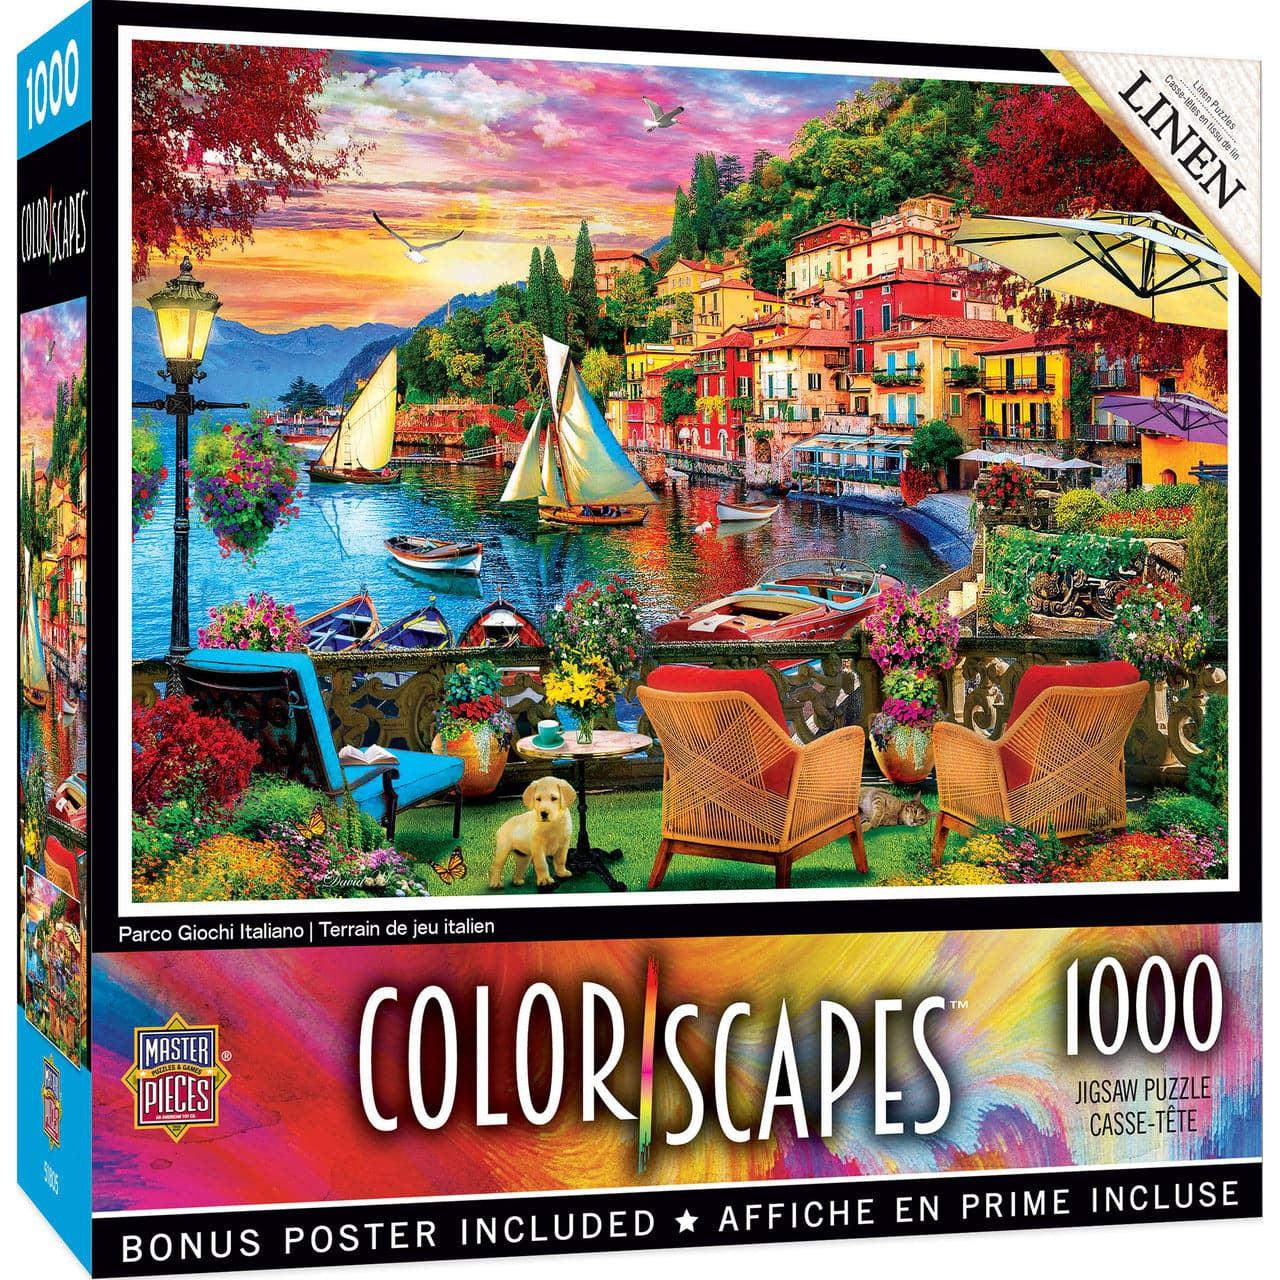 MasterPieces-Colorscapes - Parco Giochi Italiano - 1000 Piece Puzzle-72227-Legacy Toys